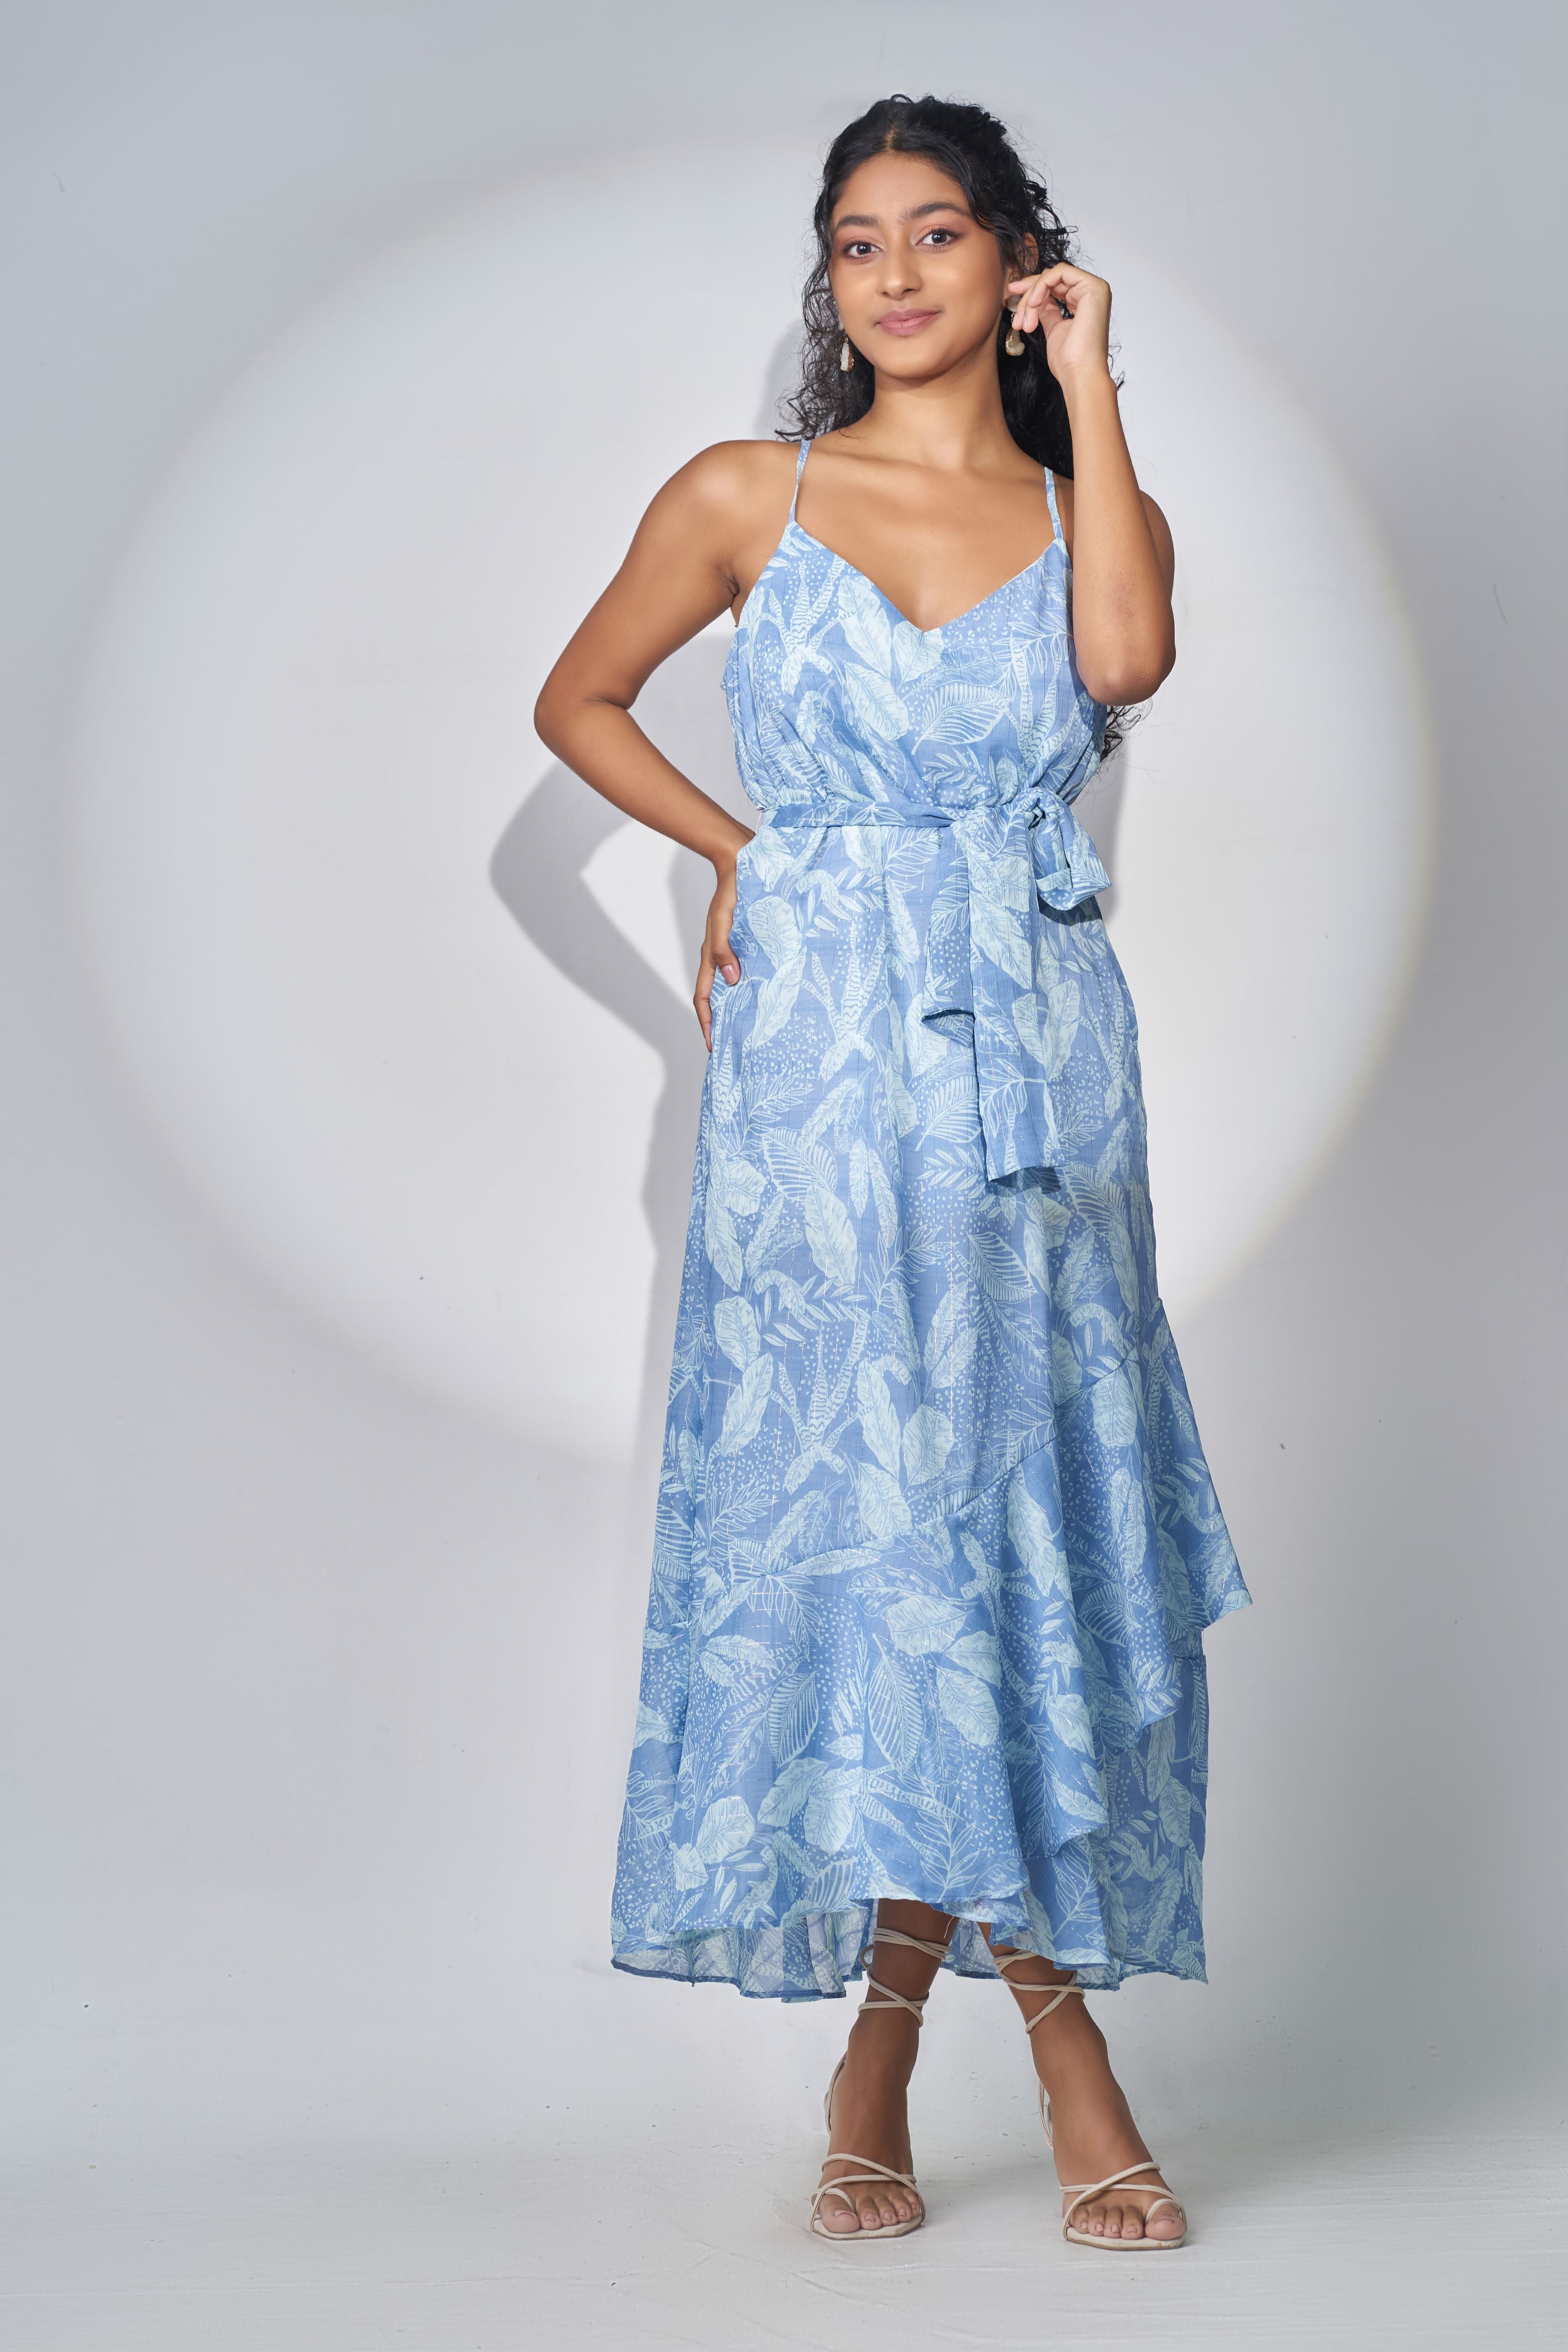 Nadia Floral Dress - Avirate Sri Lanka